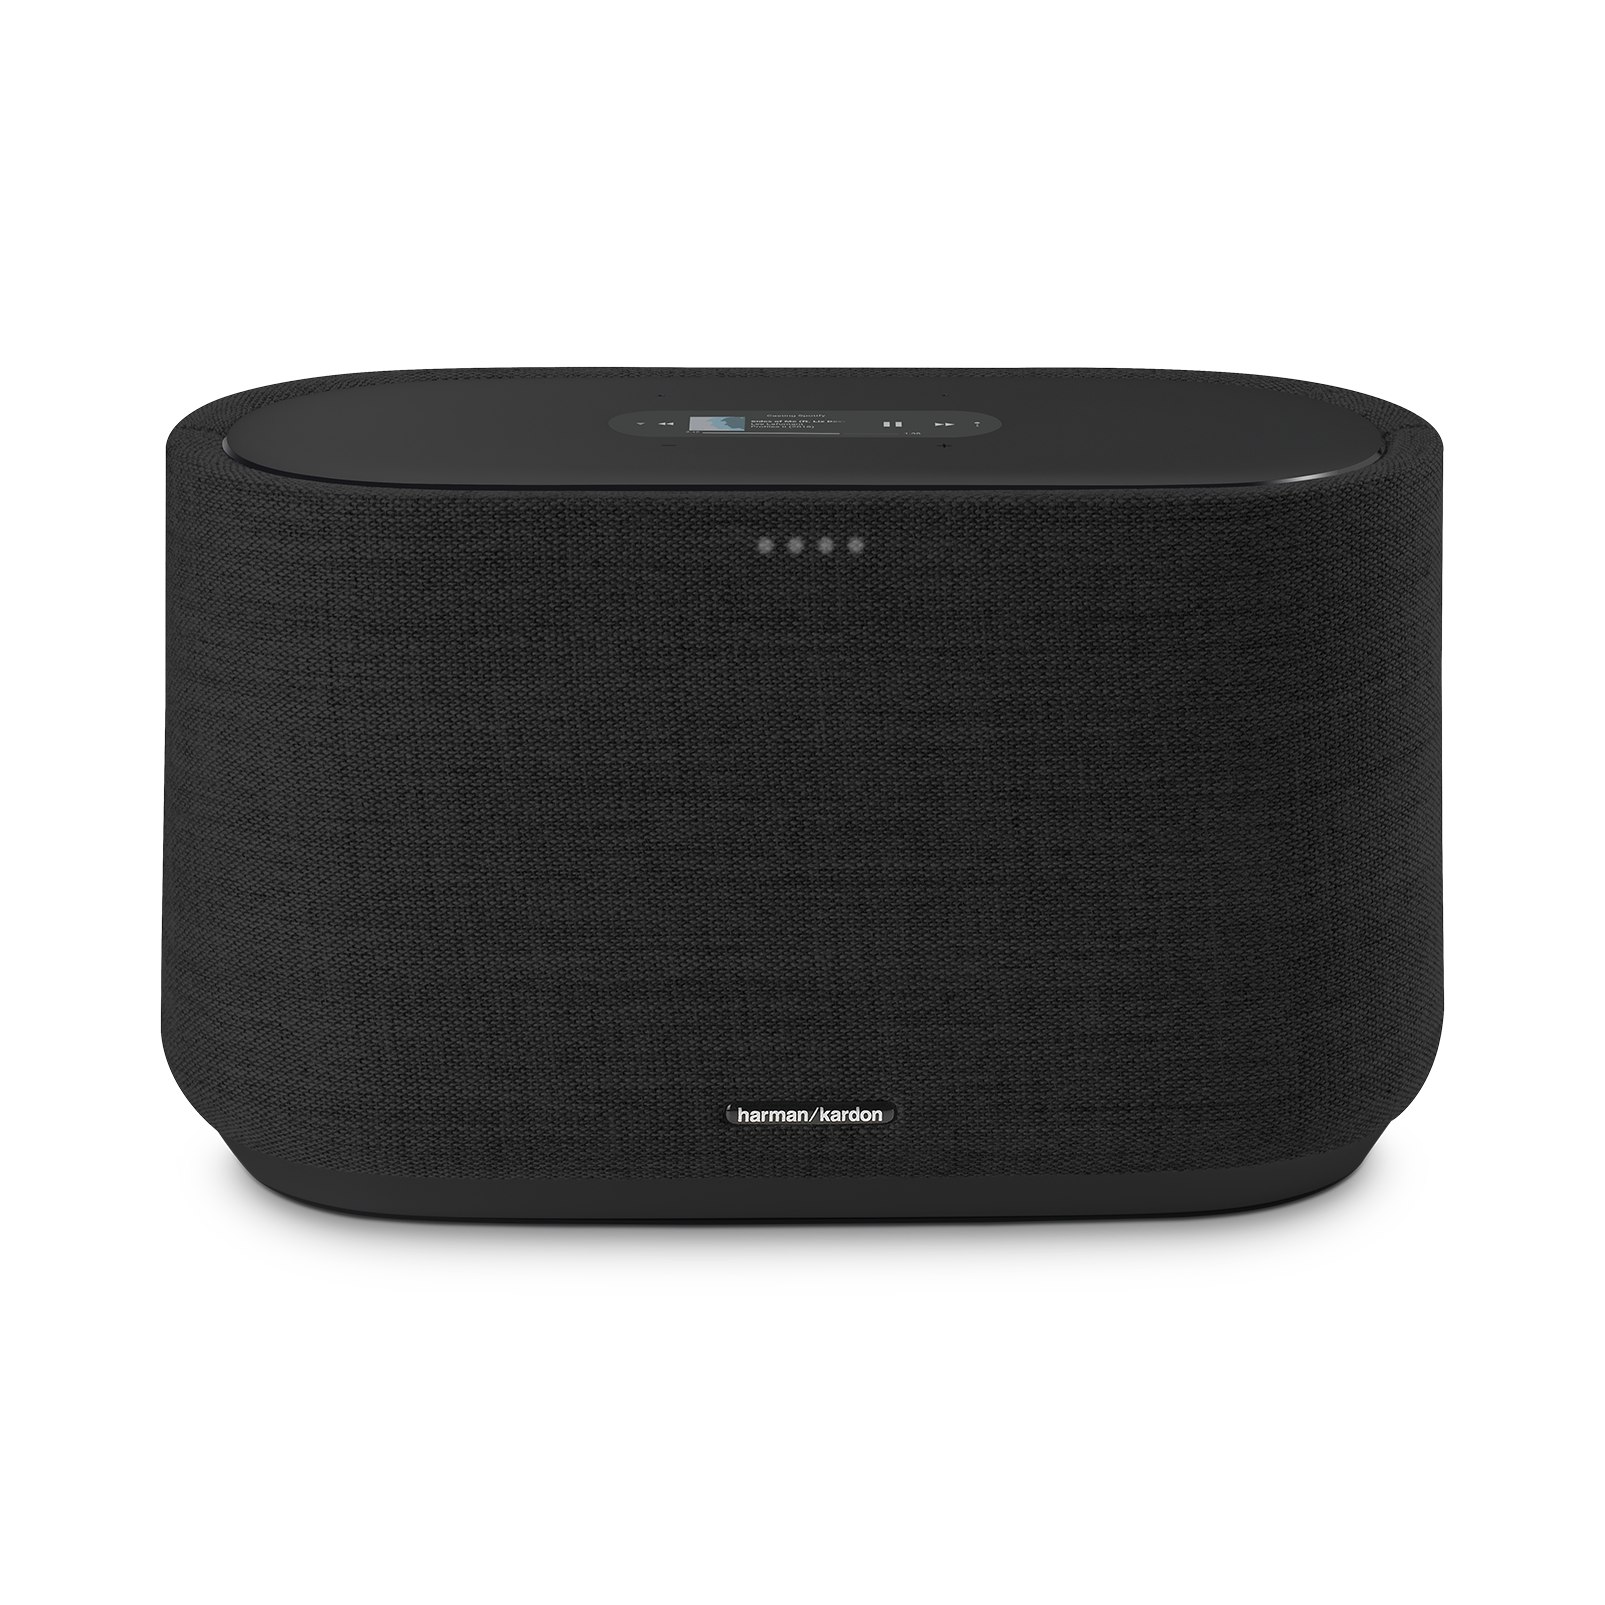 Harman Kardon Citation 300 - Black - The medium-size smart home speaker with award winning design - Front